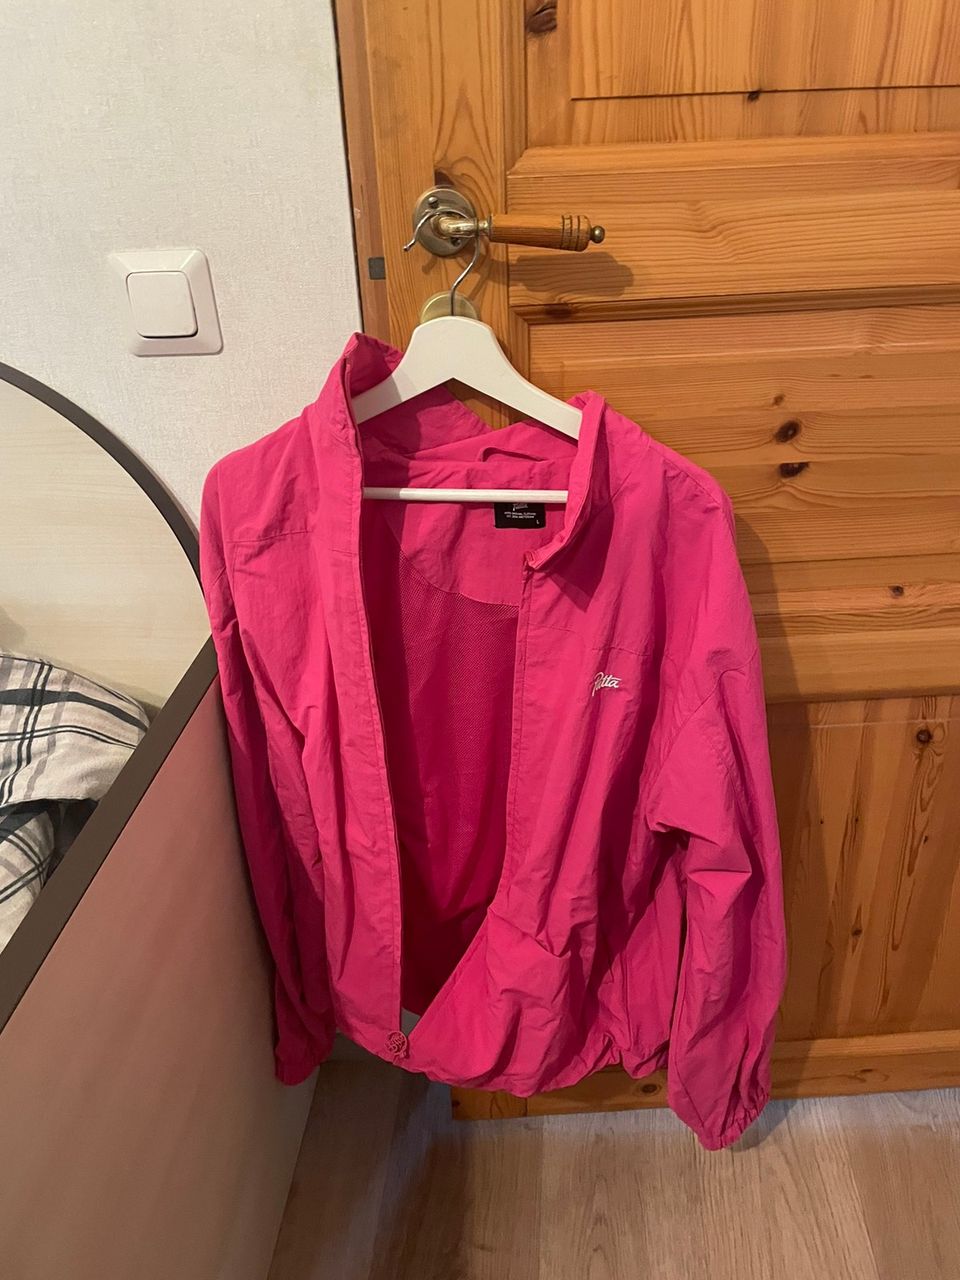 Patta pink track jacket